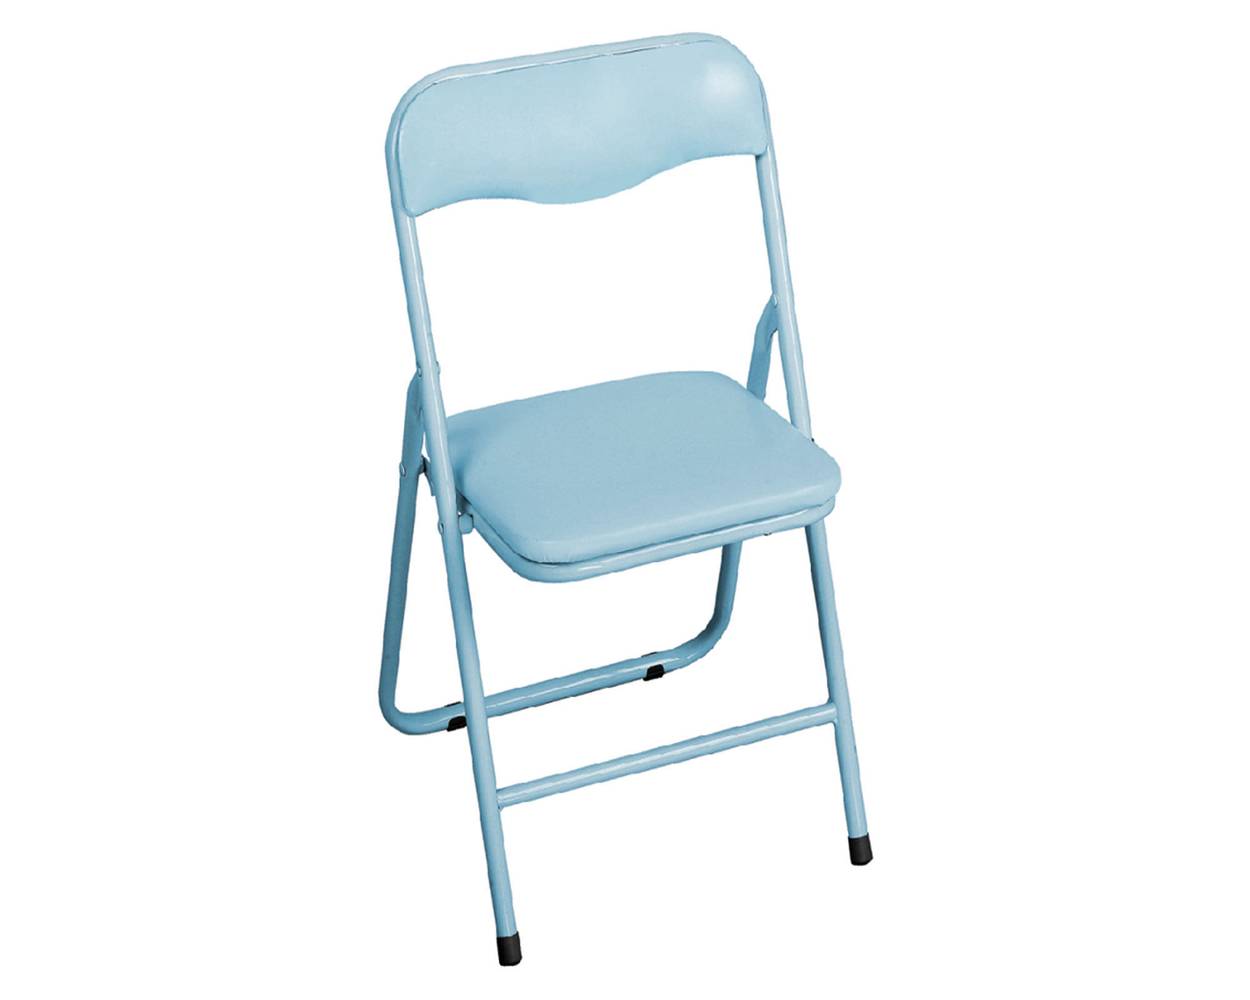 M+design silla plegable infantil 2.0 azul